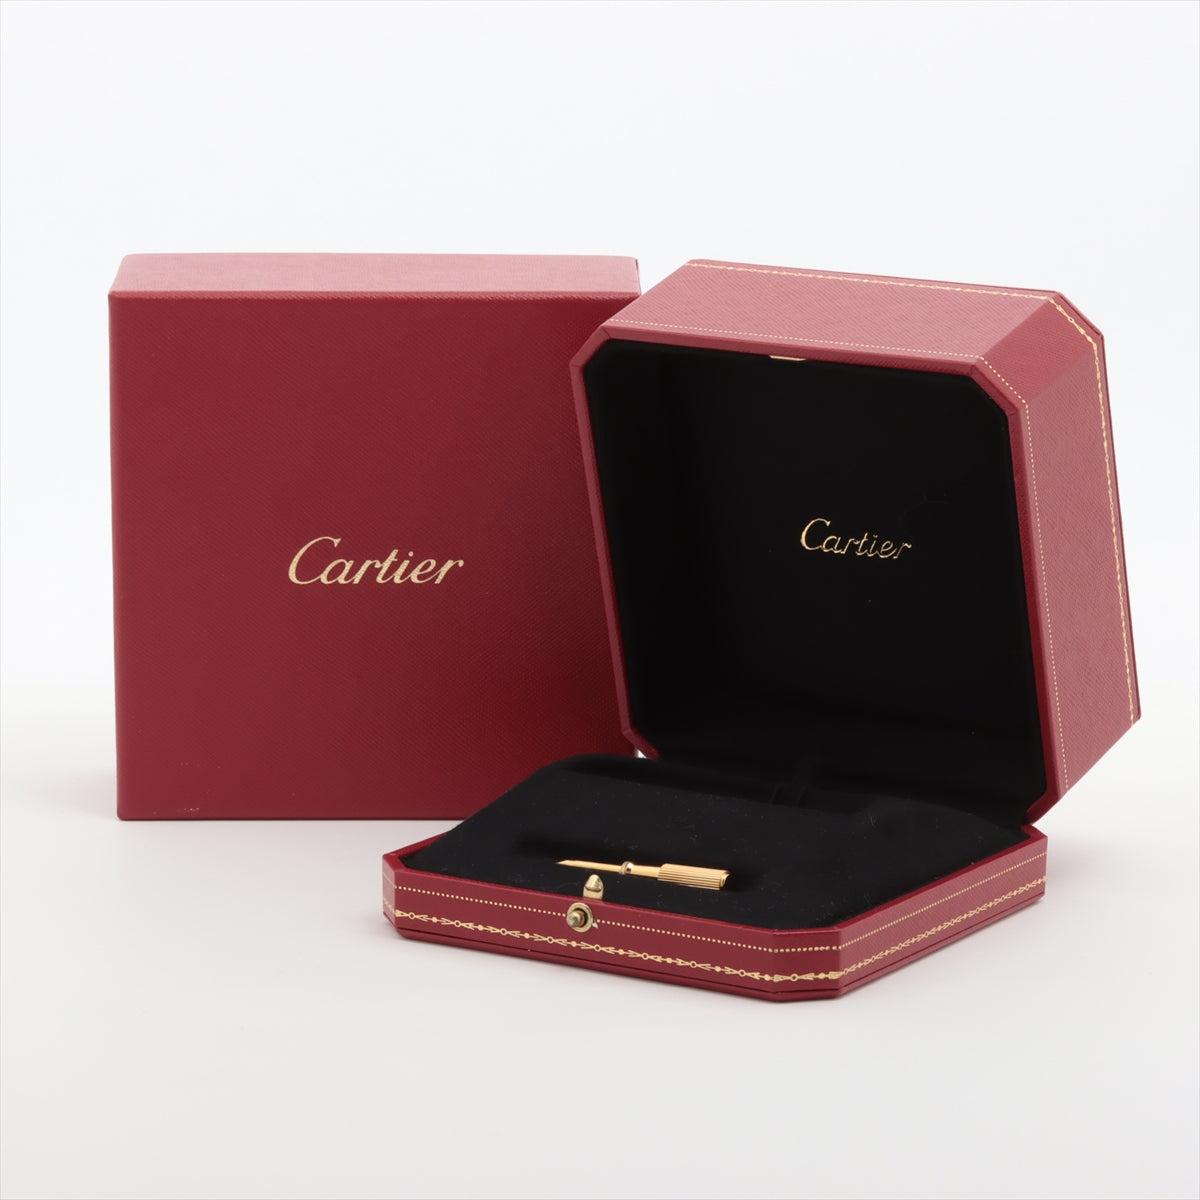 Cartier Love SM half diamond Bracelet 750(YG) 16.9g 15 With screwdriver Strain where the fastener is inserted